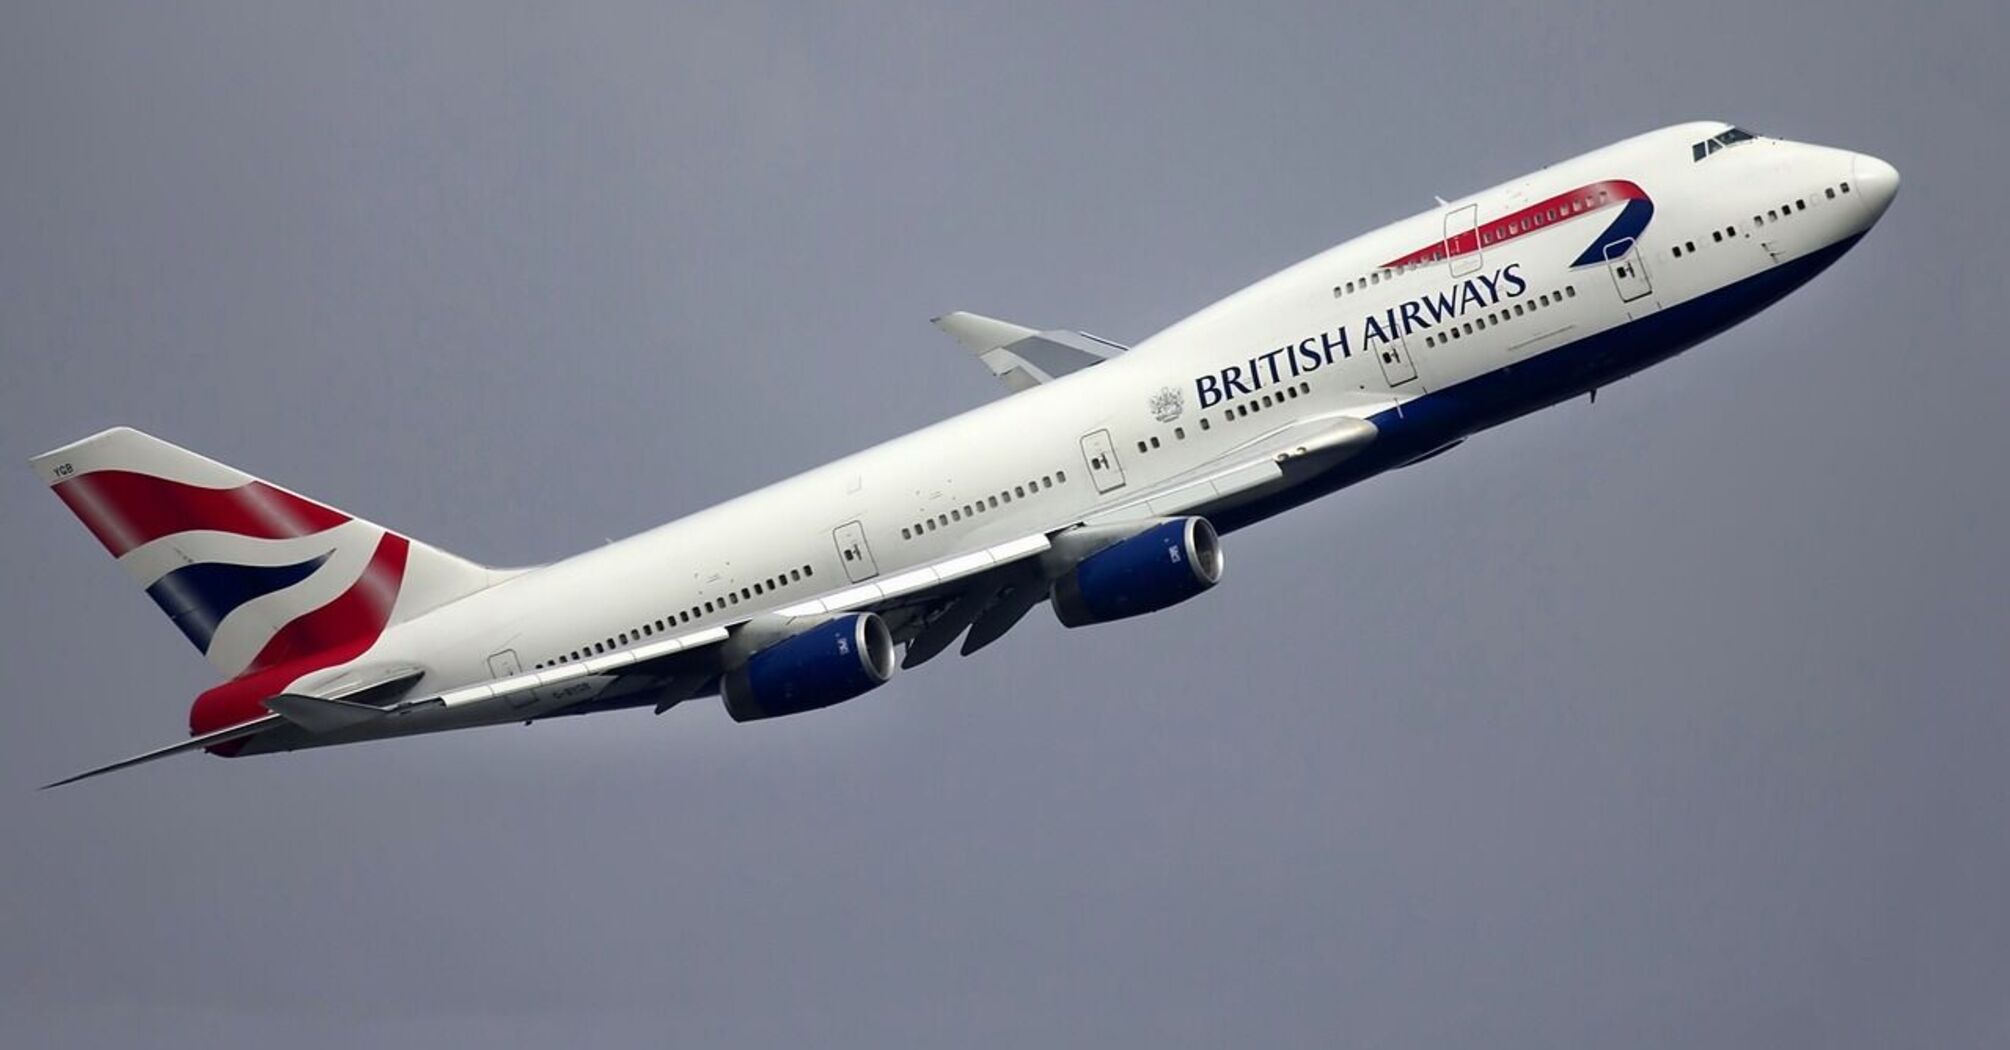 British Airways: which planes have first-class cabins